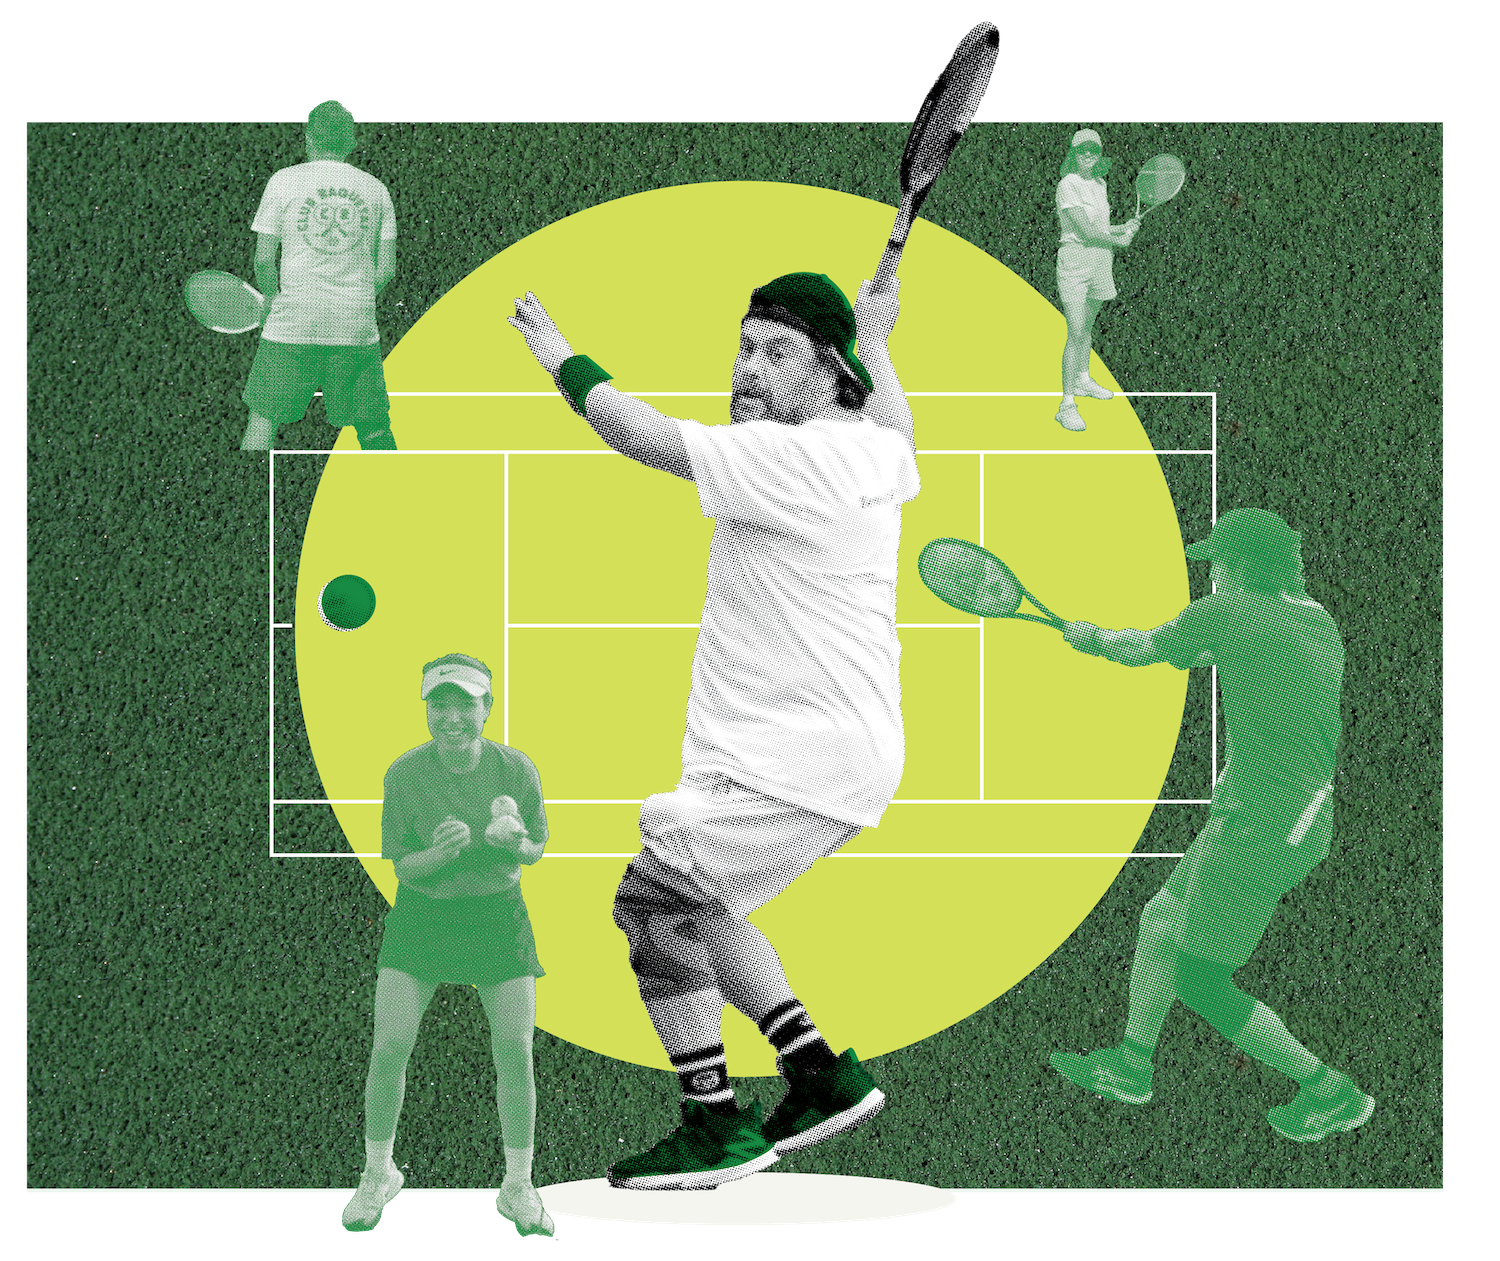 Illustration of the Club Raquetas Chula Vista tennis club for San Diego's latino community featuring tennis players on a court